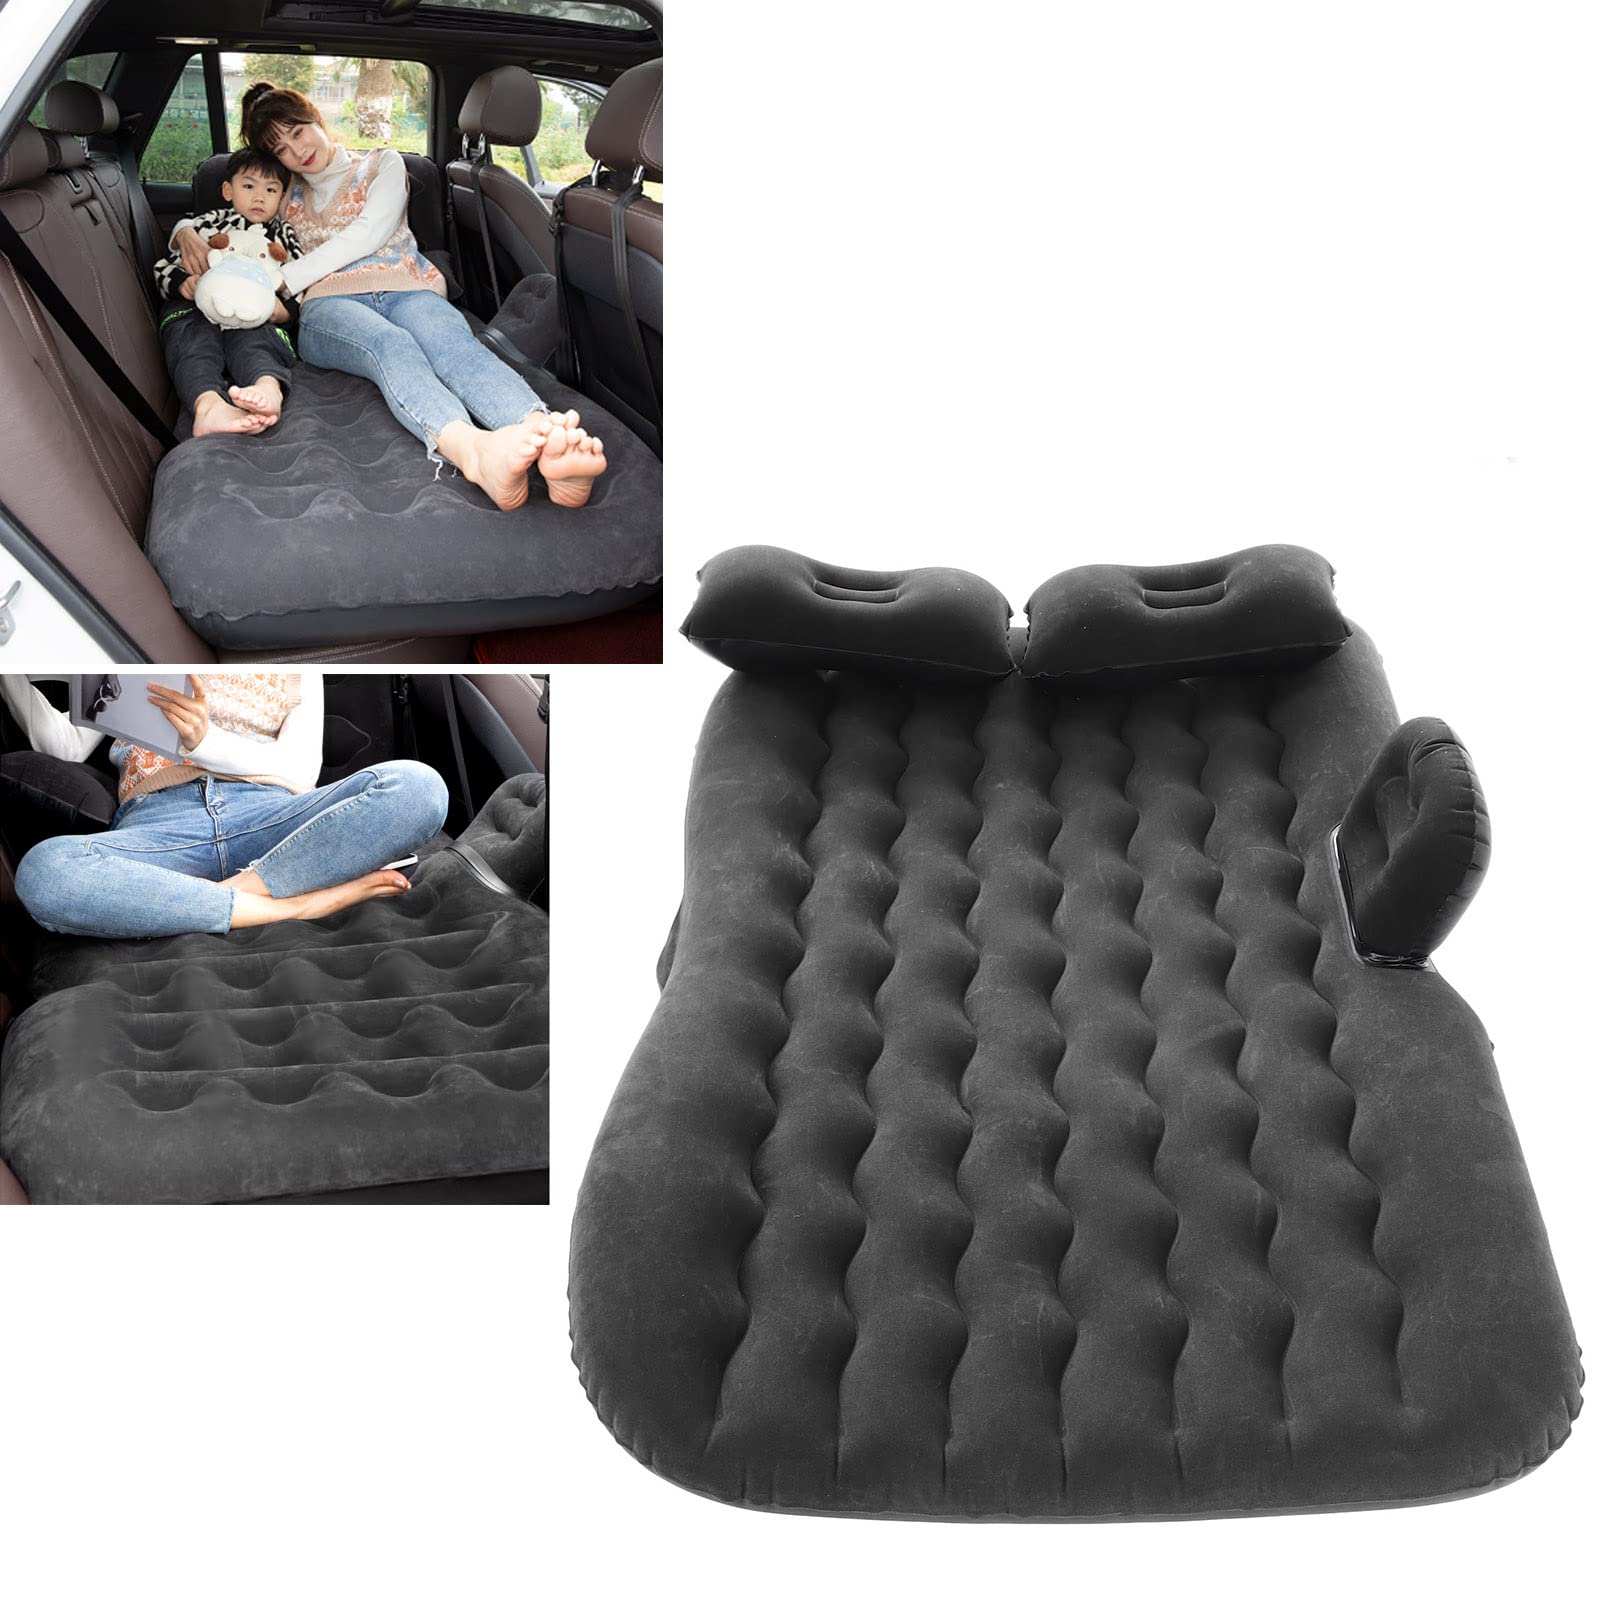 CHICIRIS Car Air Bed, Inflatable Car Mattress, Inflatable Car Air Mattress Bed Hammock Type Suede Car Camping Bed Sleeping Pad for Travel